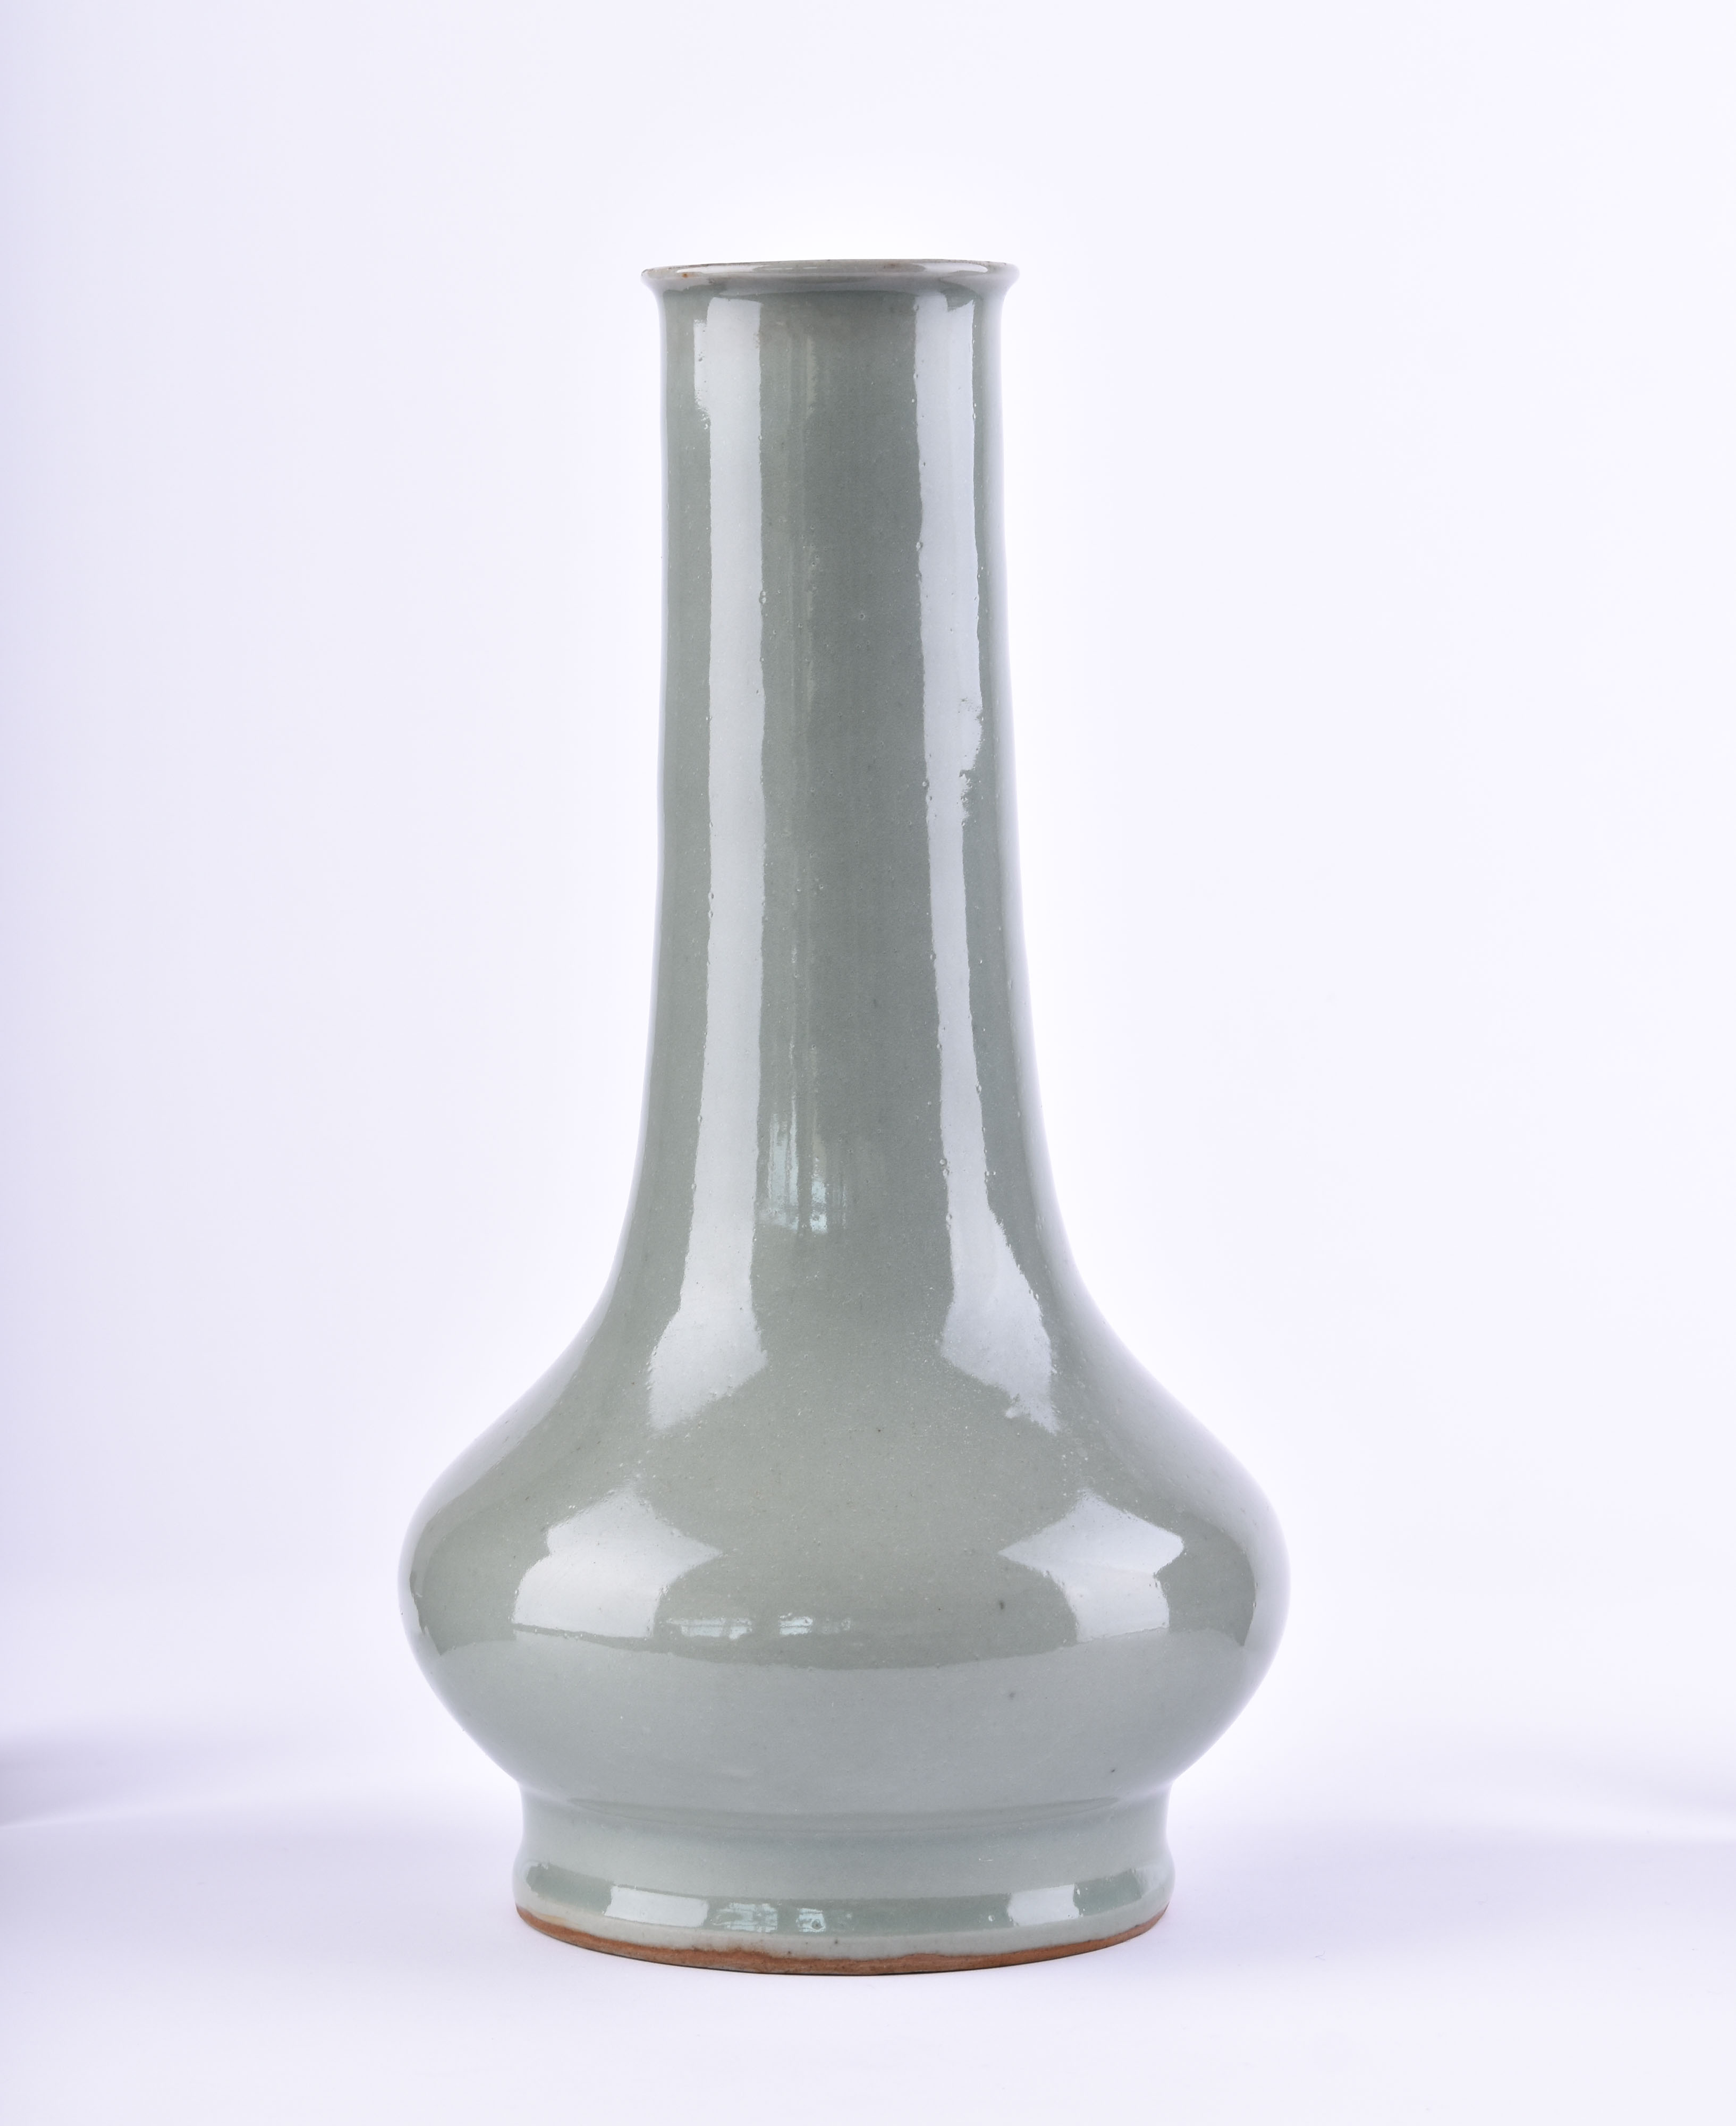 Celadon vase China Qing dynasty 17th / 18th century  - Image 3 of 4